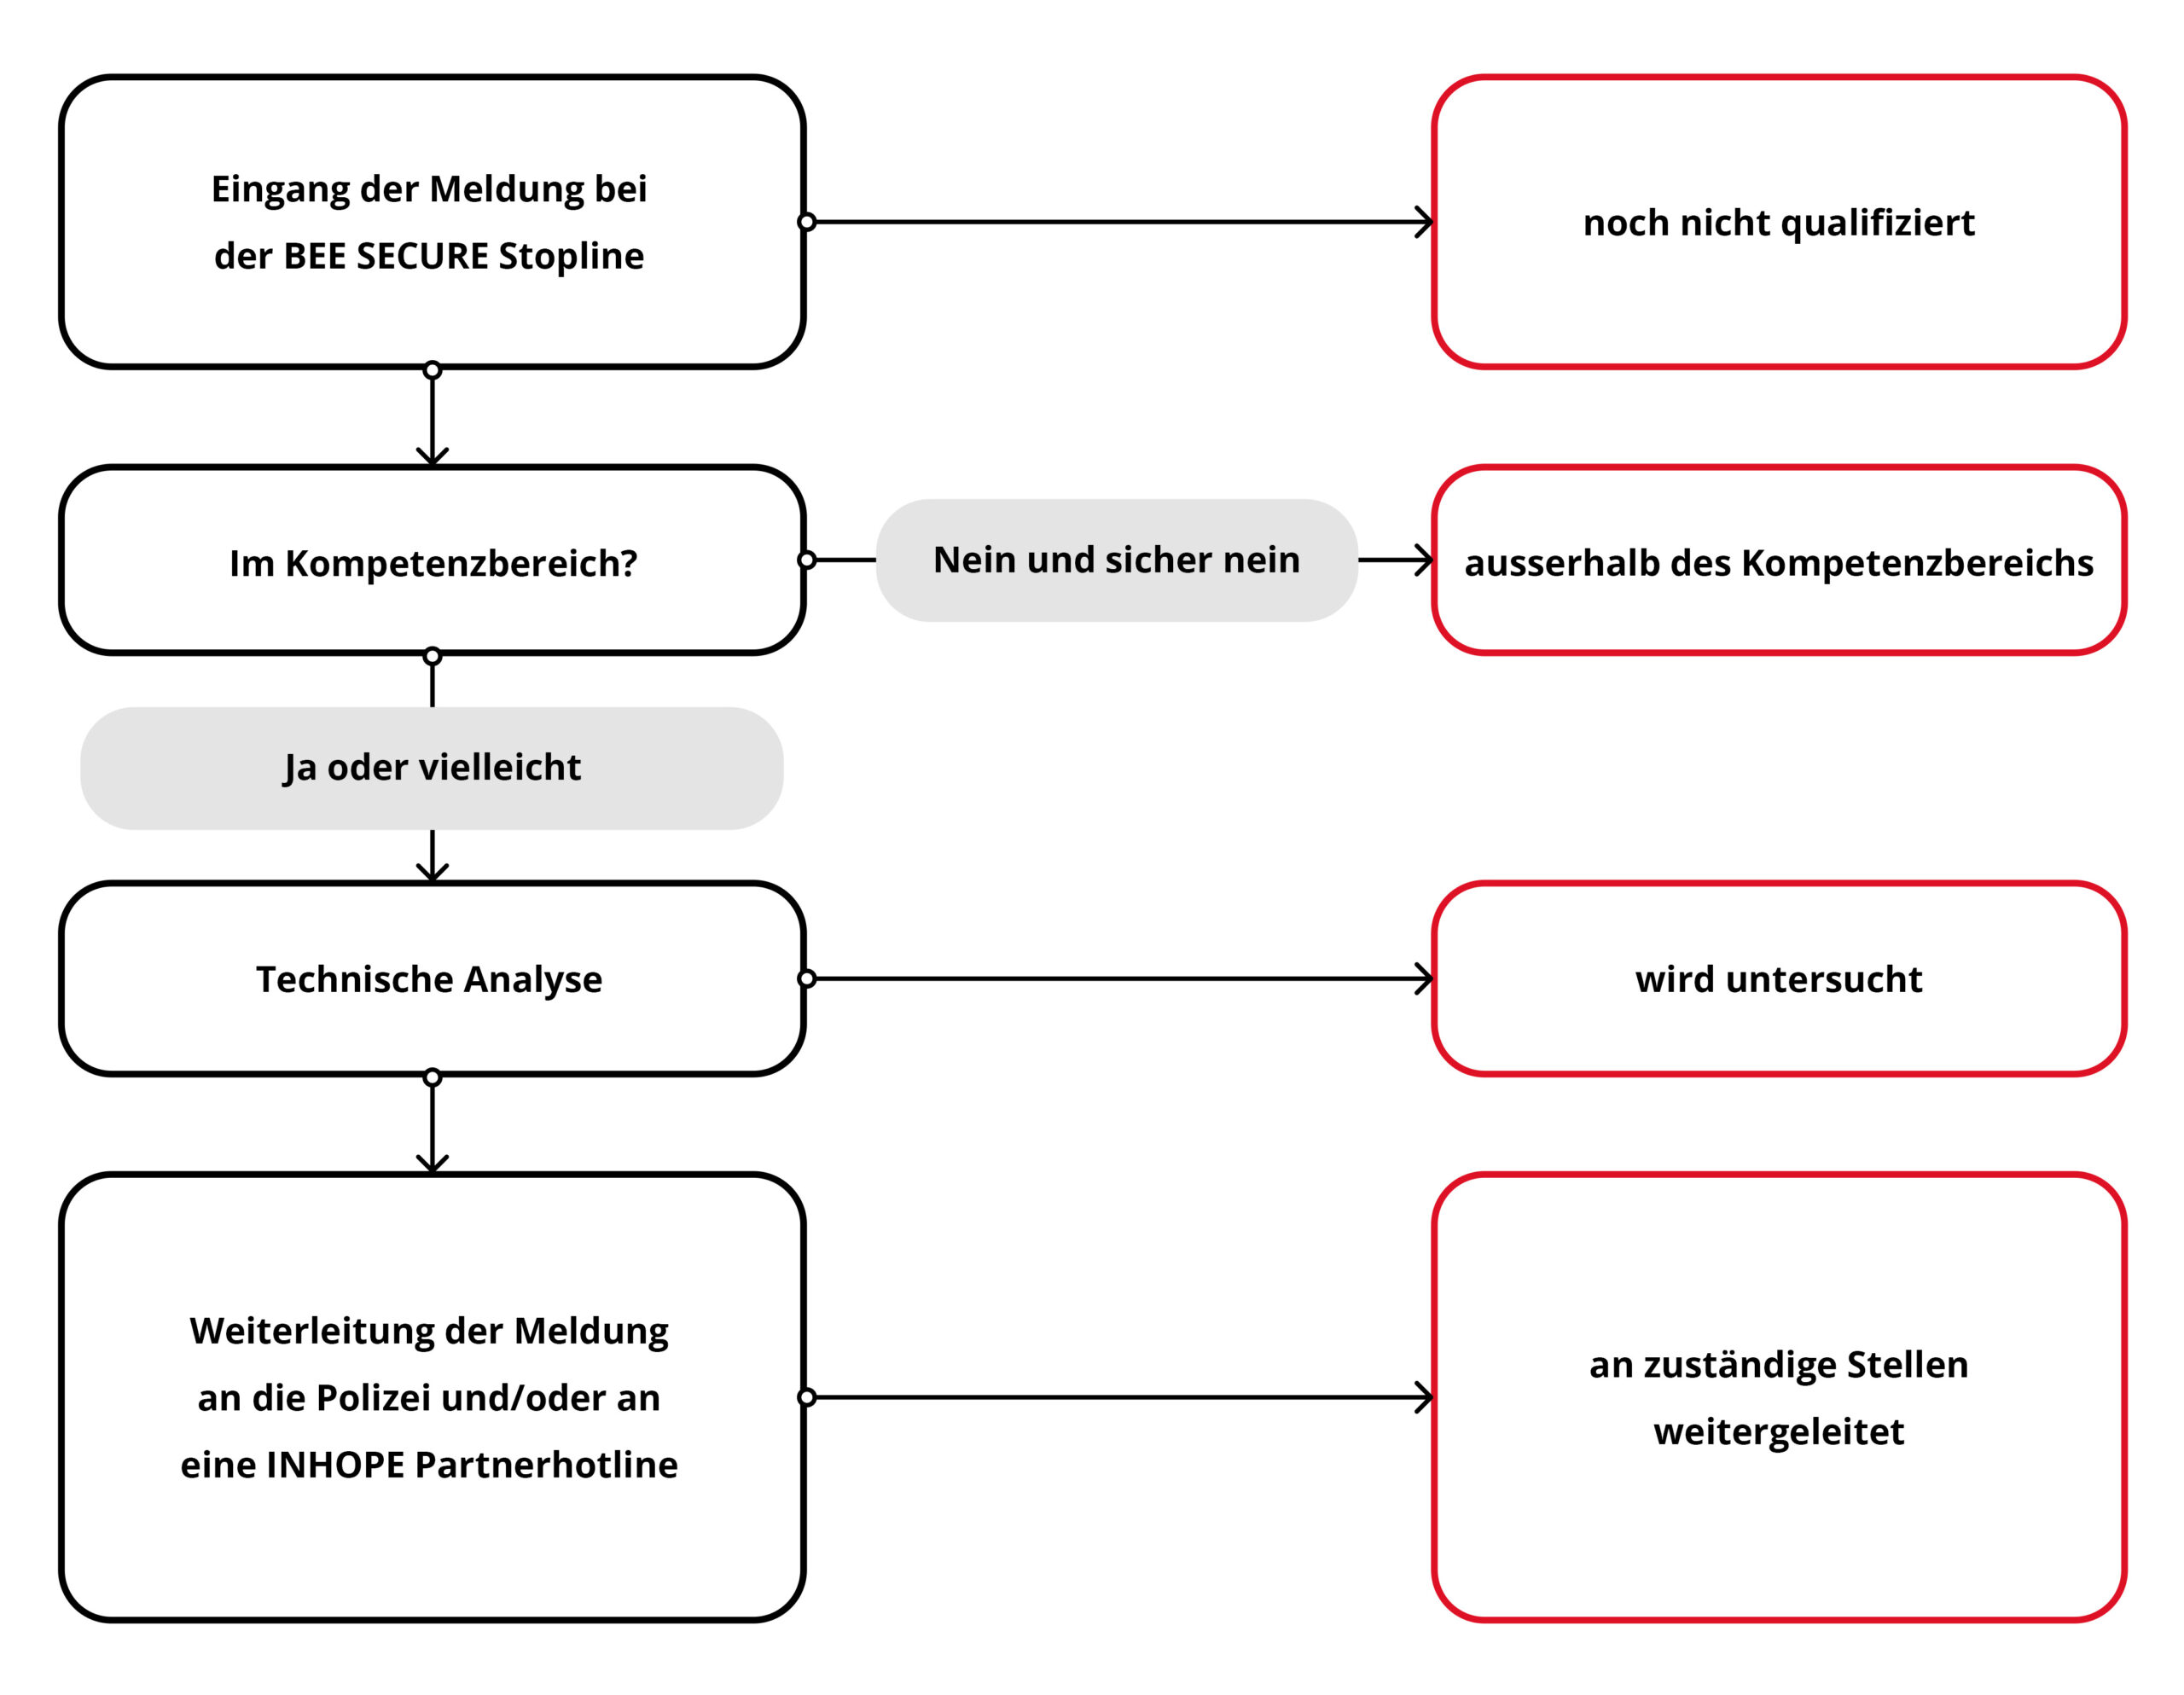 Processing of a report (detailed description below - enlarge image)